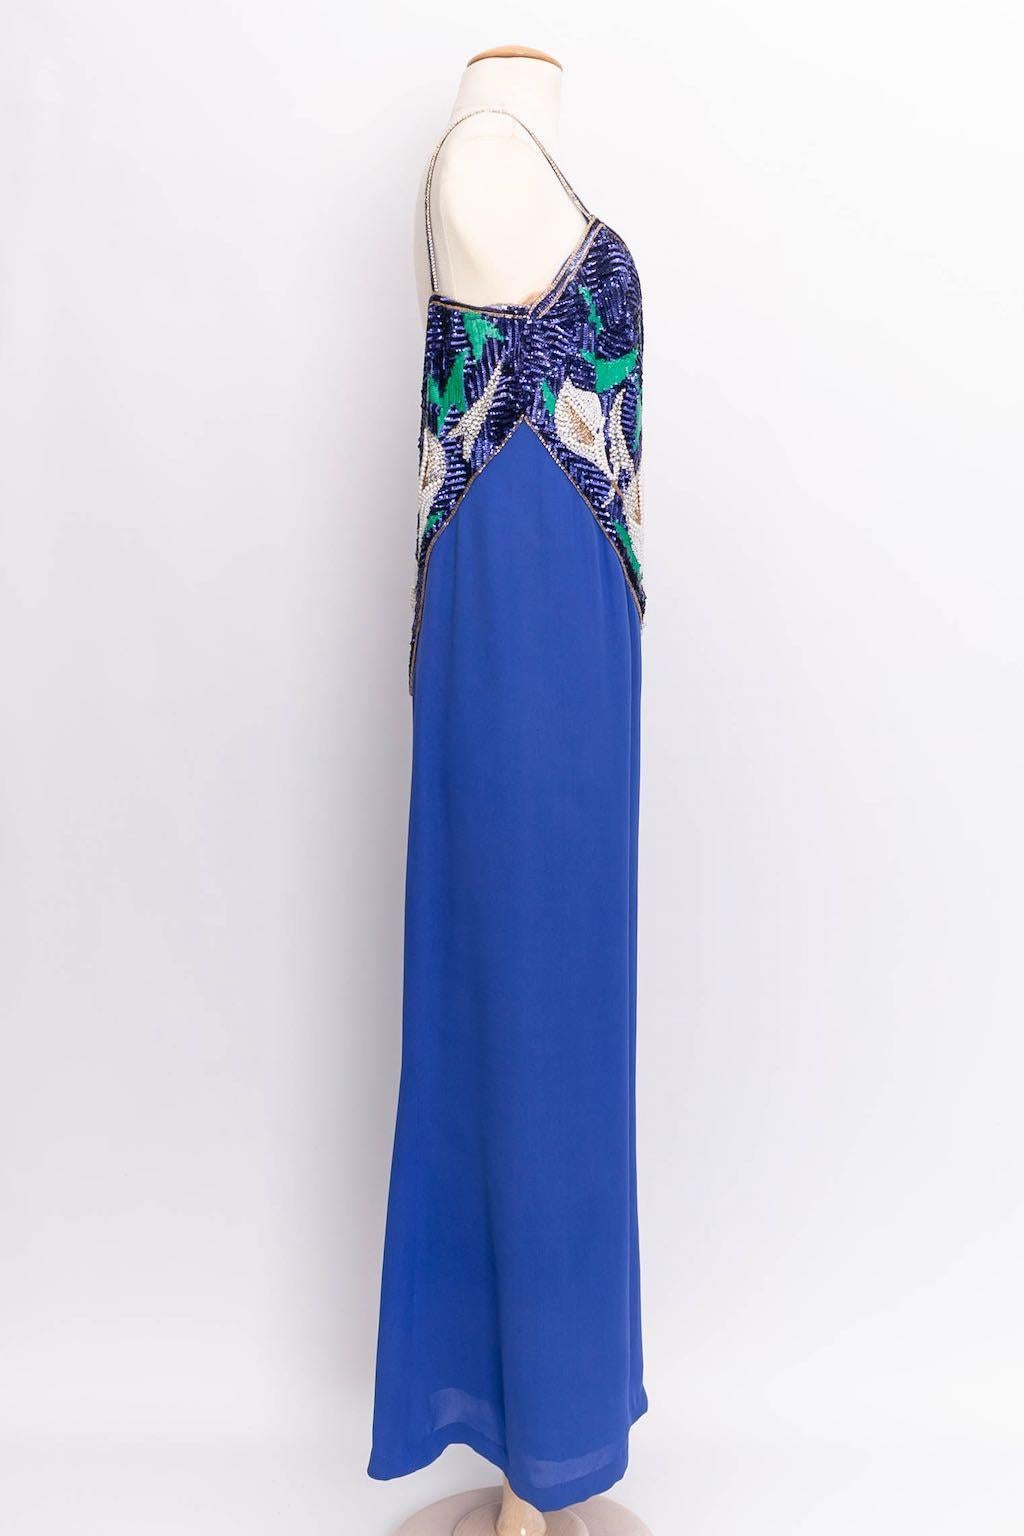 Pierre Balmain Haute Couture Viscose Embroidered Dress In Excellent Condition For Sale In SAINT-OUEN-SUR-SEINE, FR